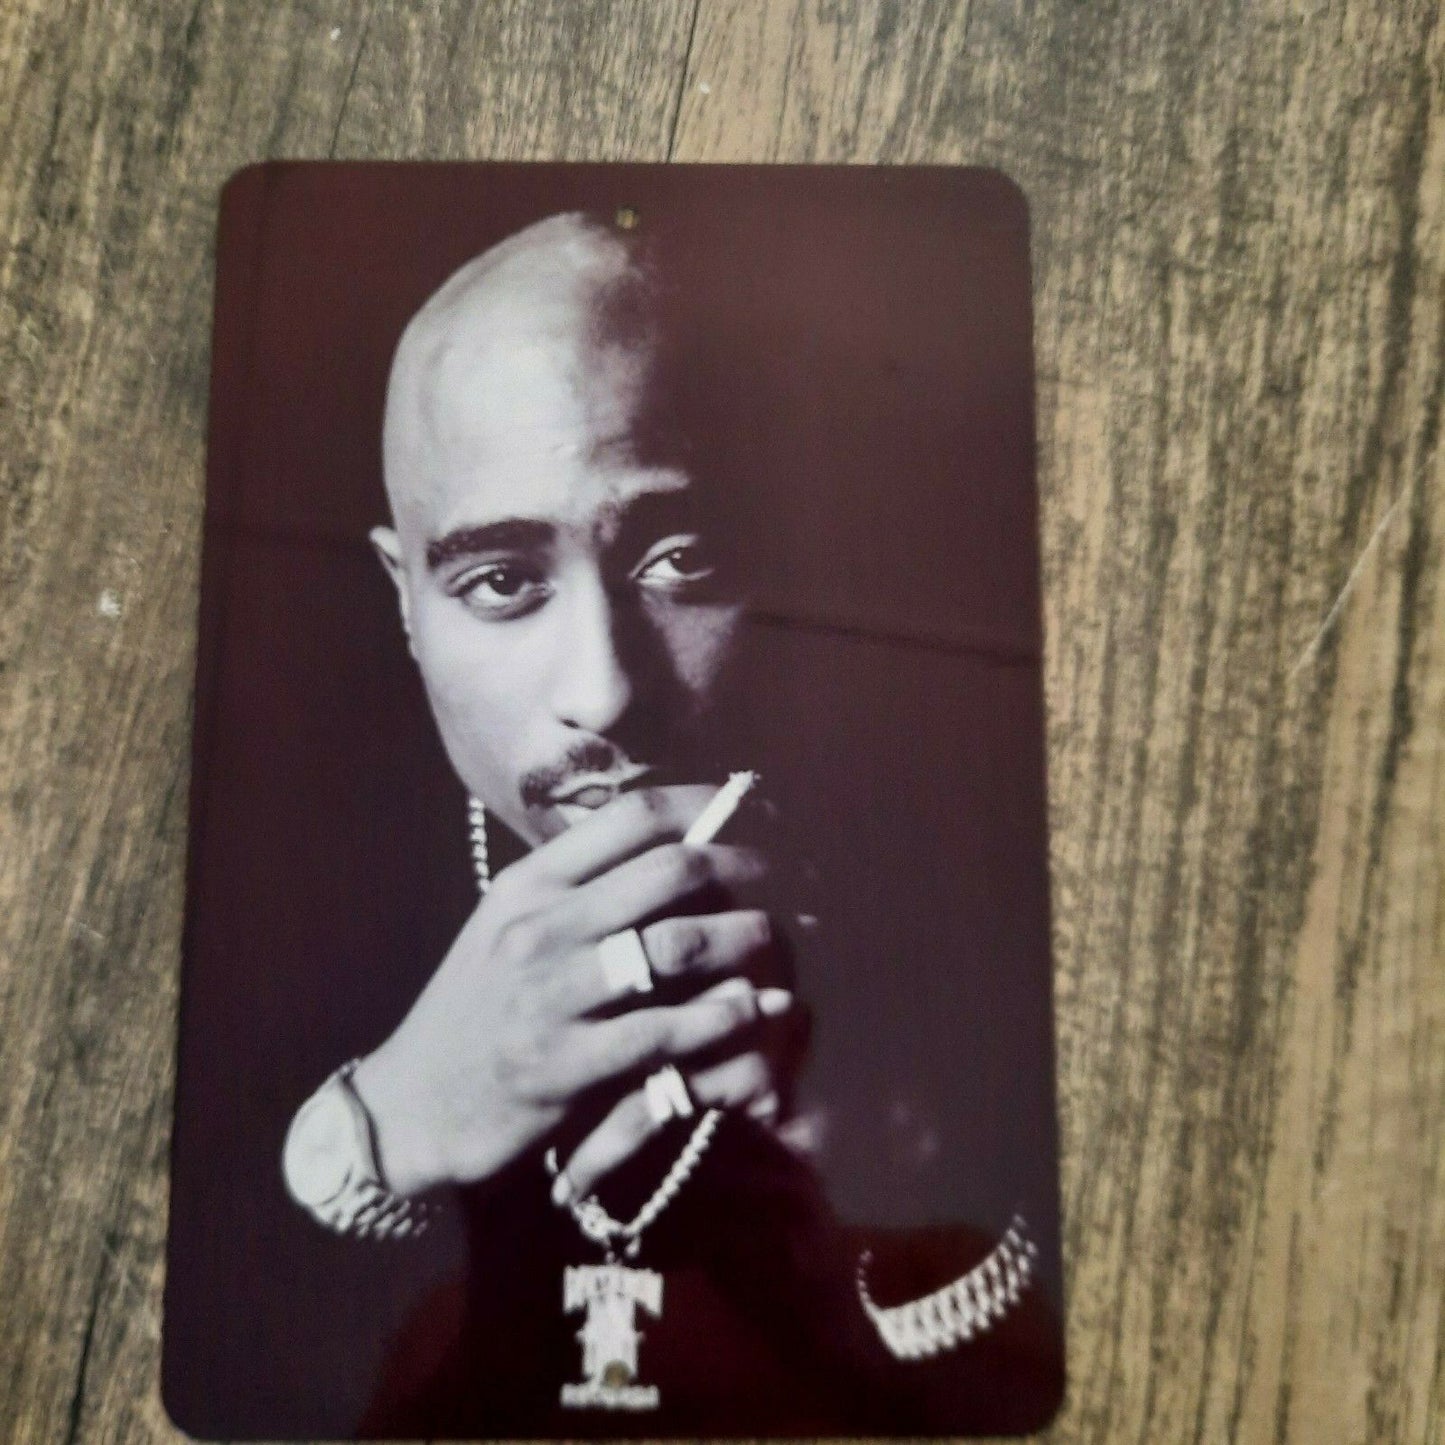 Tupac 2pac Shakur 8x12 Metal Wall Sign #2